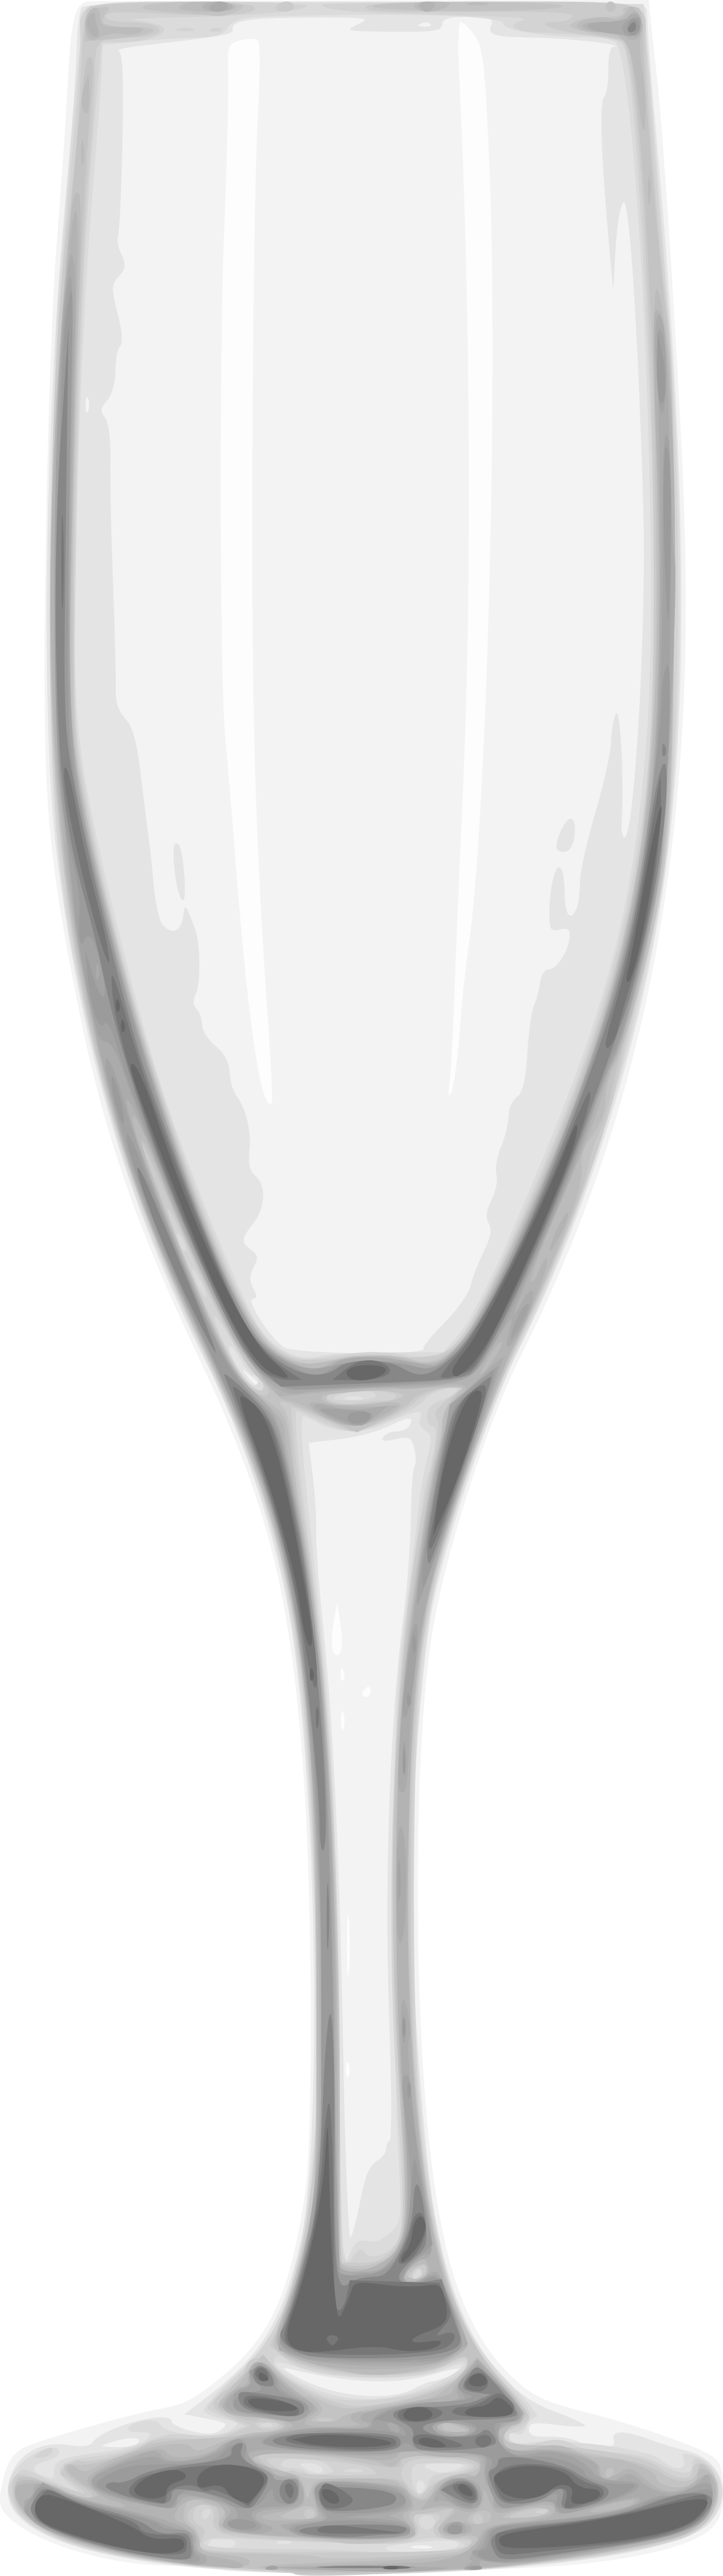 https://upload.wikimedia.org/wikipedia/commons/thumb/1/1e/Flute_Glass.svg/1200px-Flute_Glass.svg.png